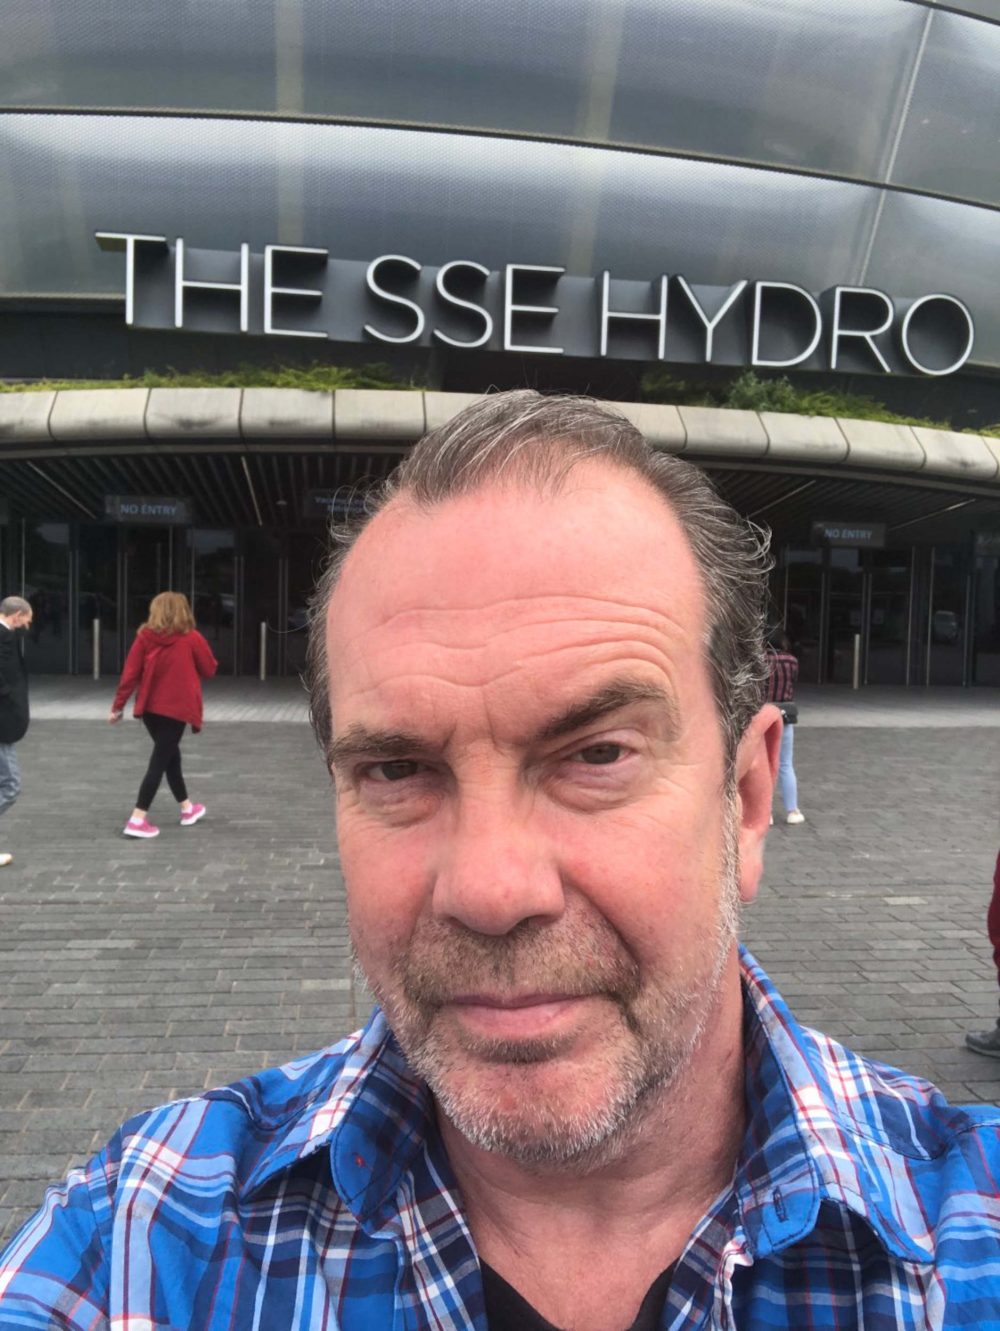 Gavin Mitchell Hydro selfie - TV News Scotland